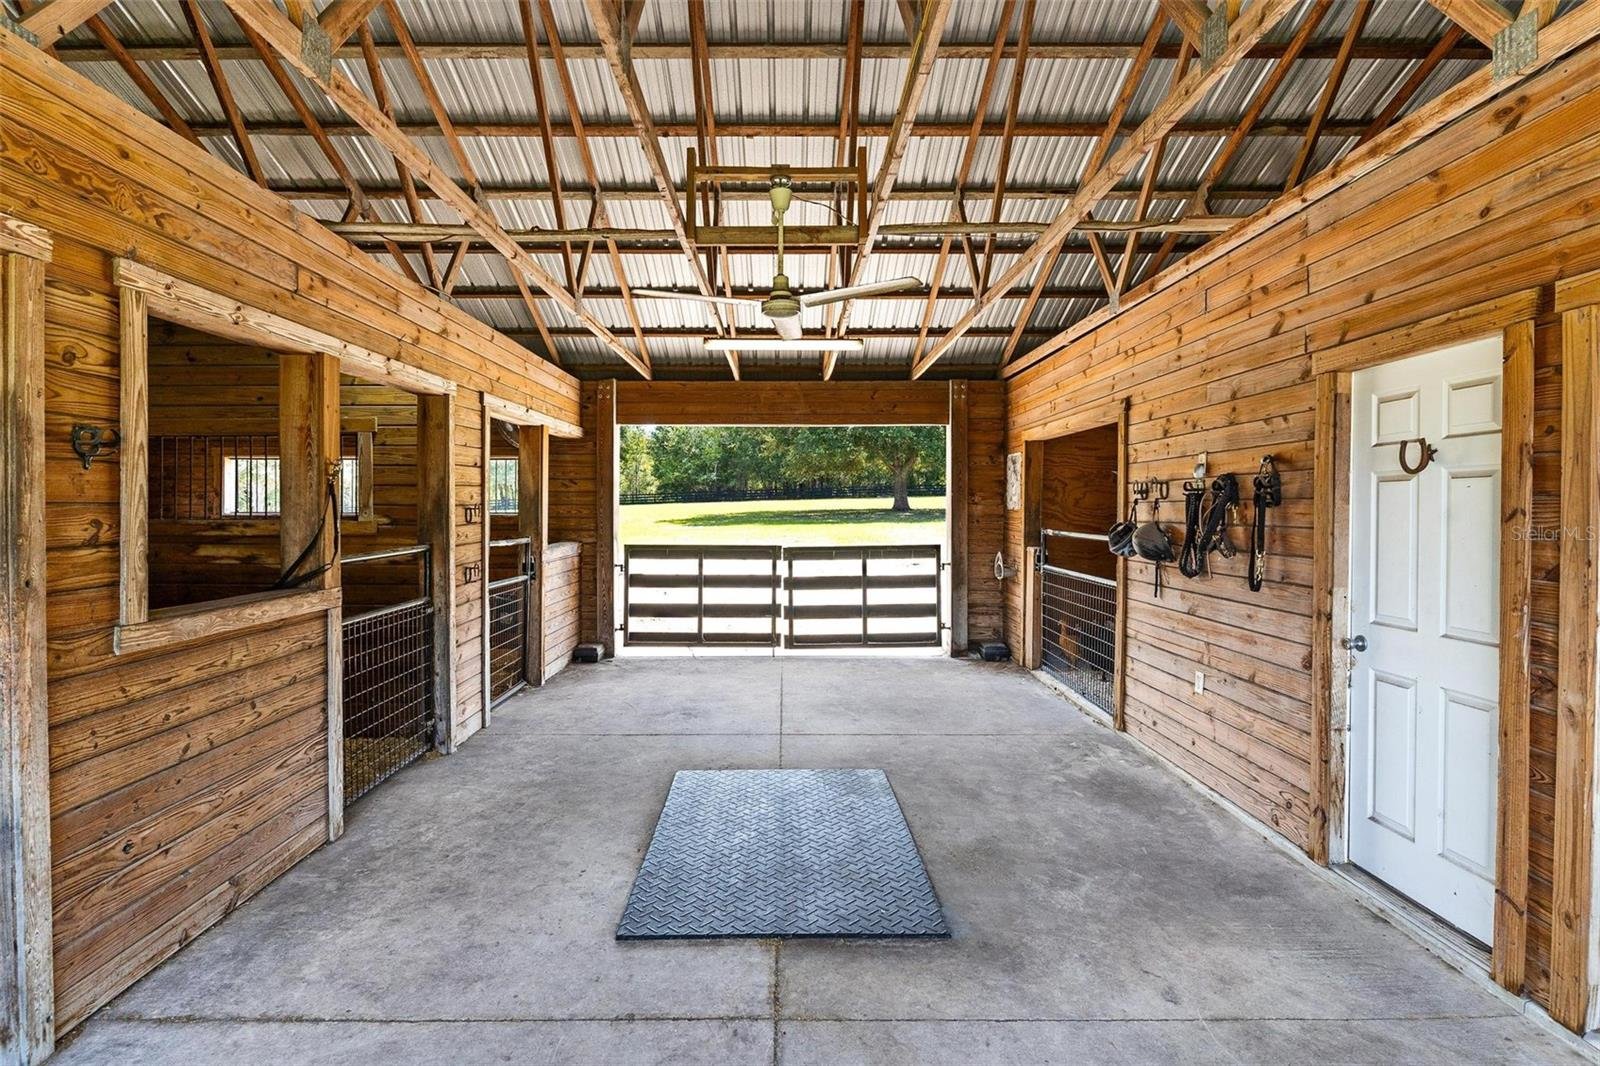 inside view of an open barn